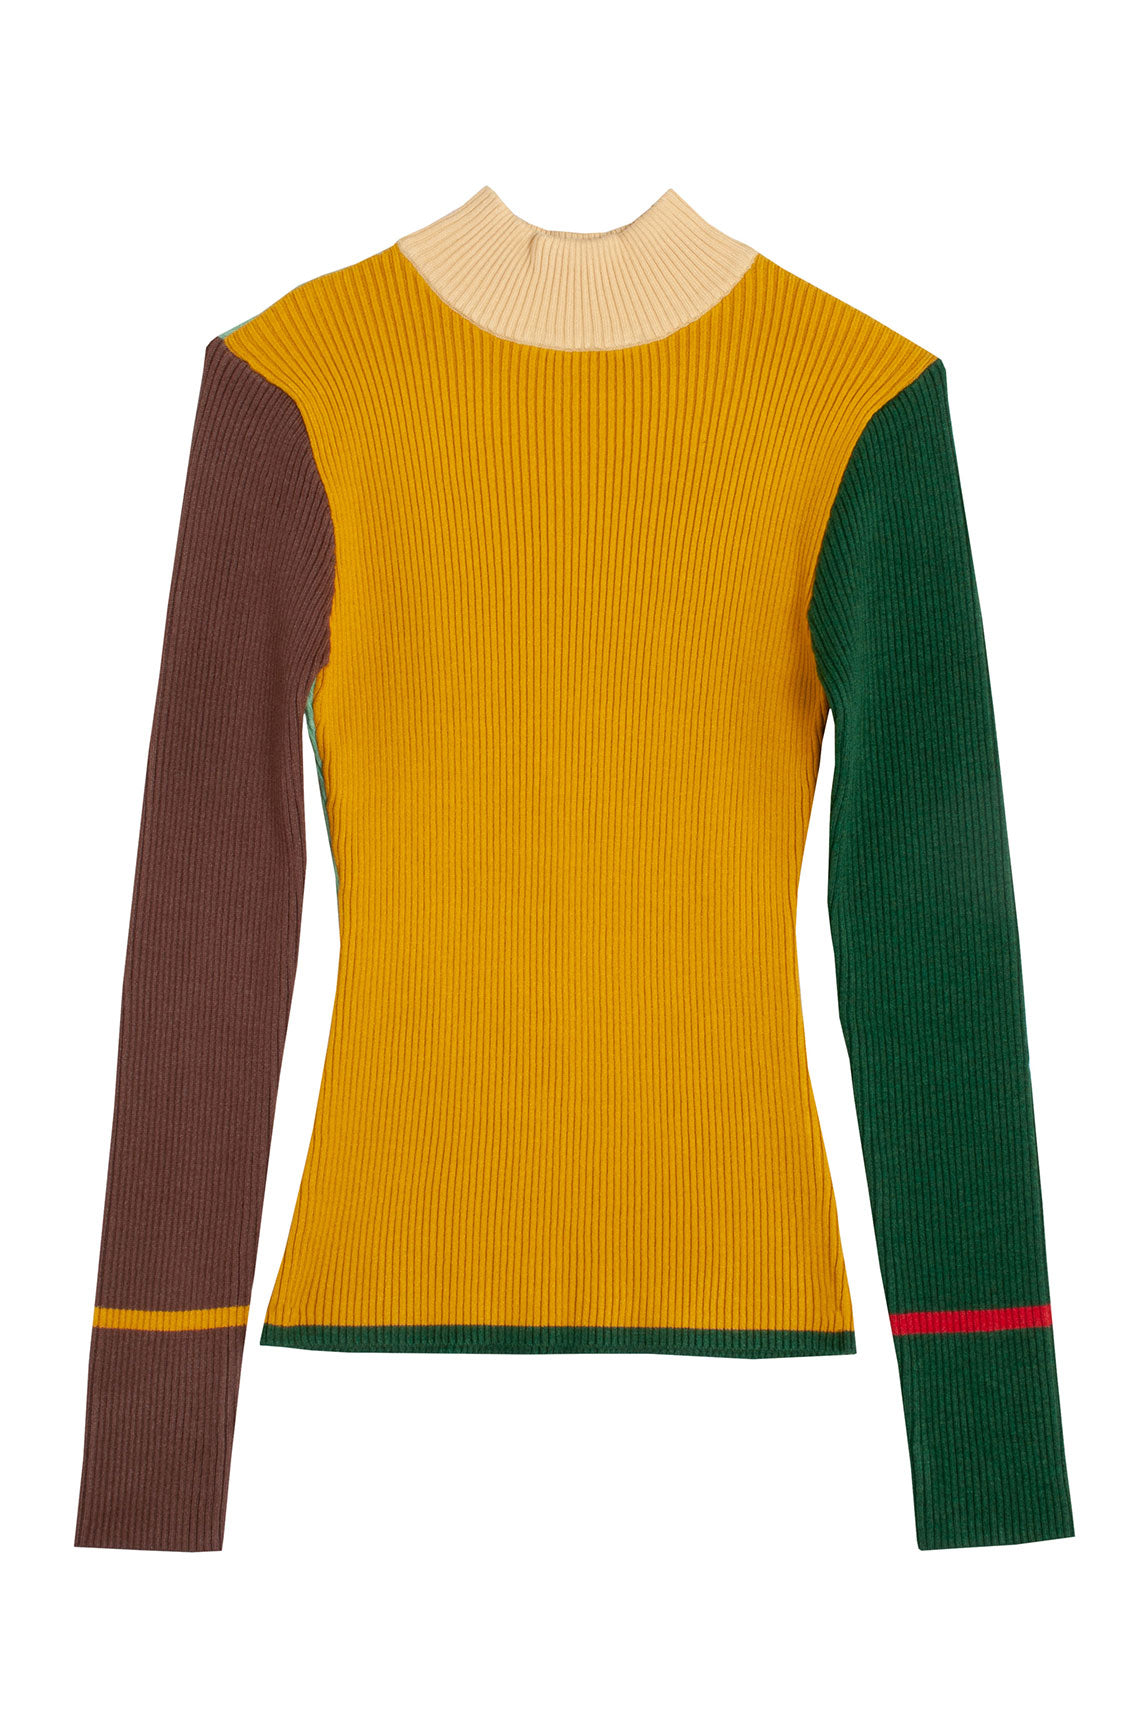 Emerald Bodhi Sweater